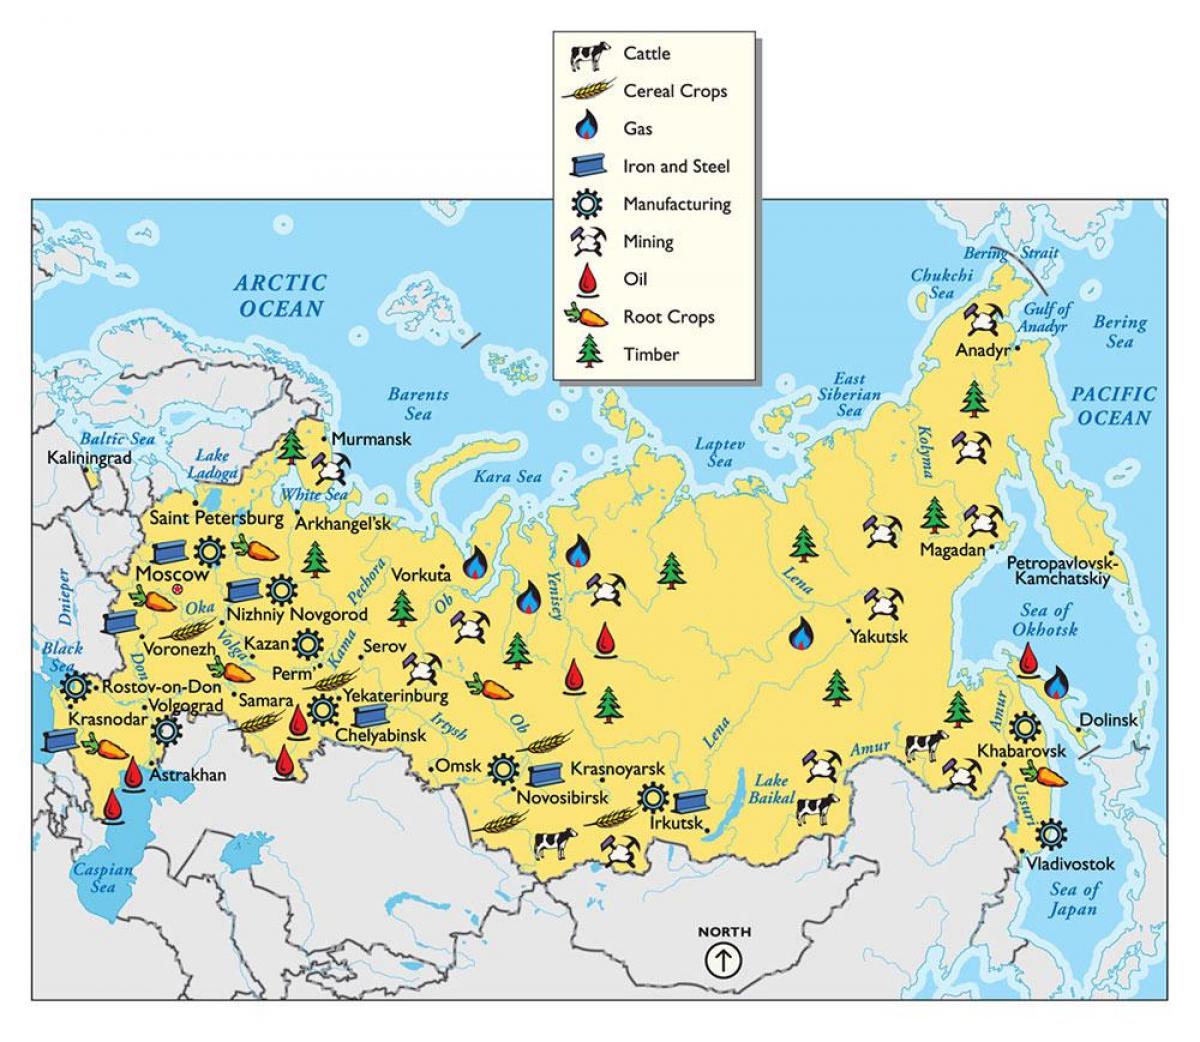 Russia monumento mapa - Mapa ng Russia monumento ...